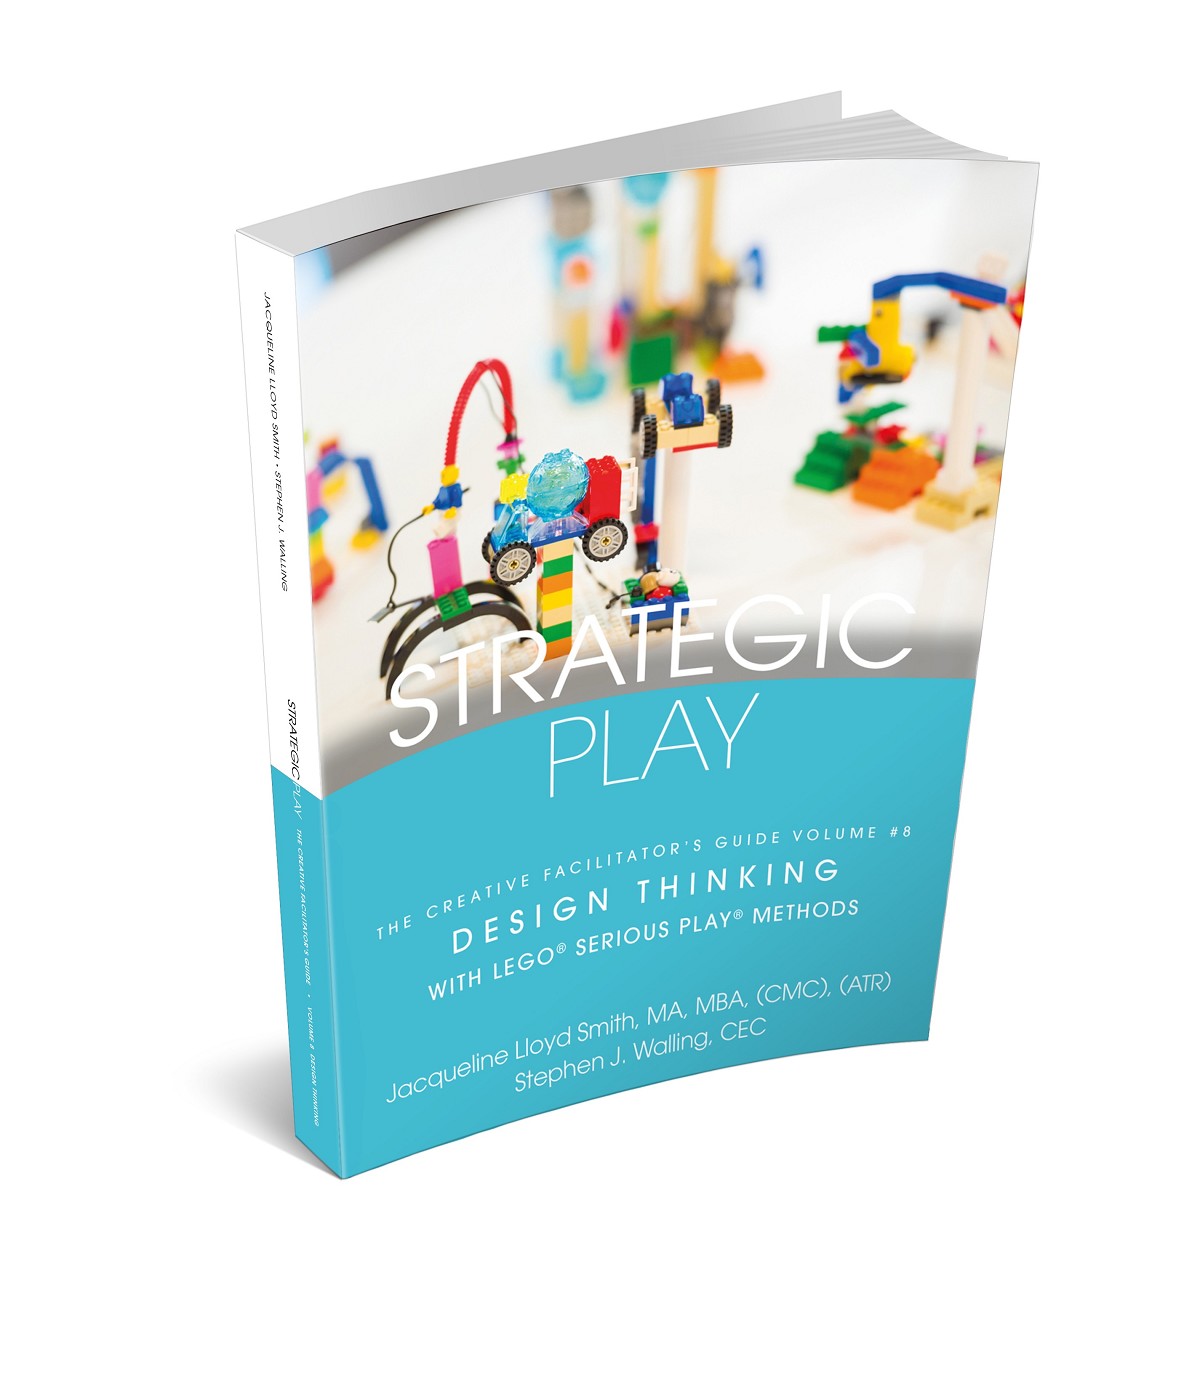 wzw-strategic-play-design-thinking